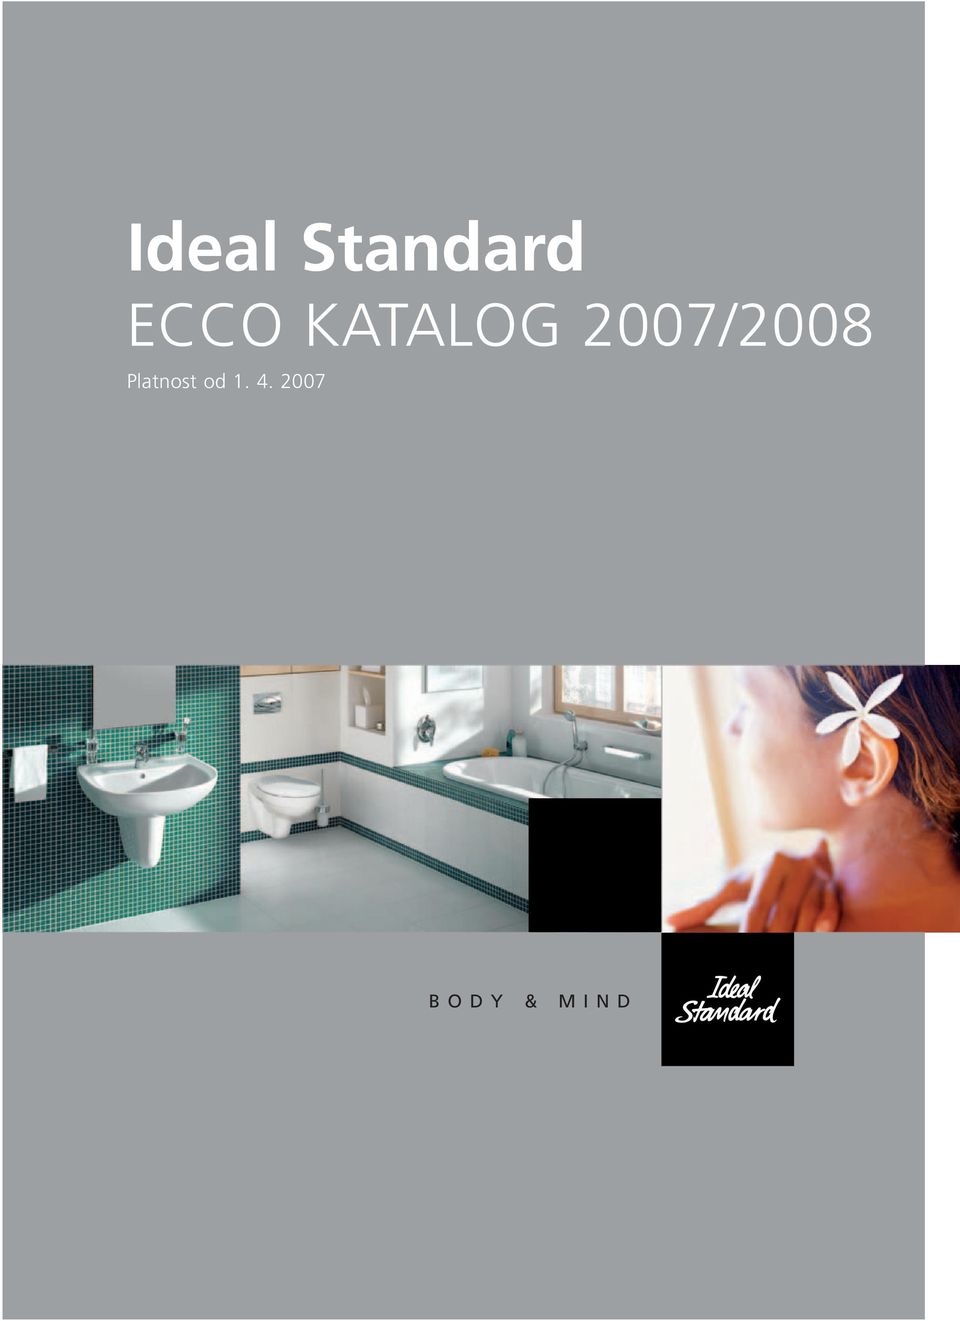 Almost dead Take-up Oxidize Ideal Standard ECCO KATALOG 2007/2008 Platnost od - PDF Free Download